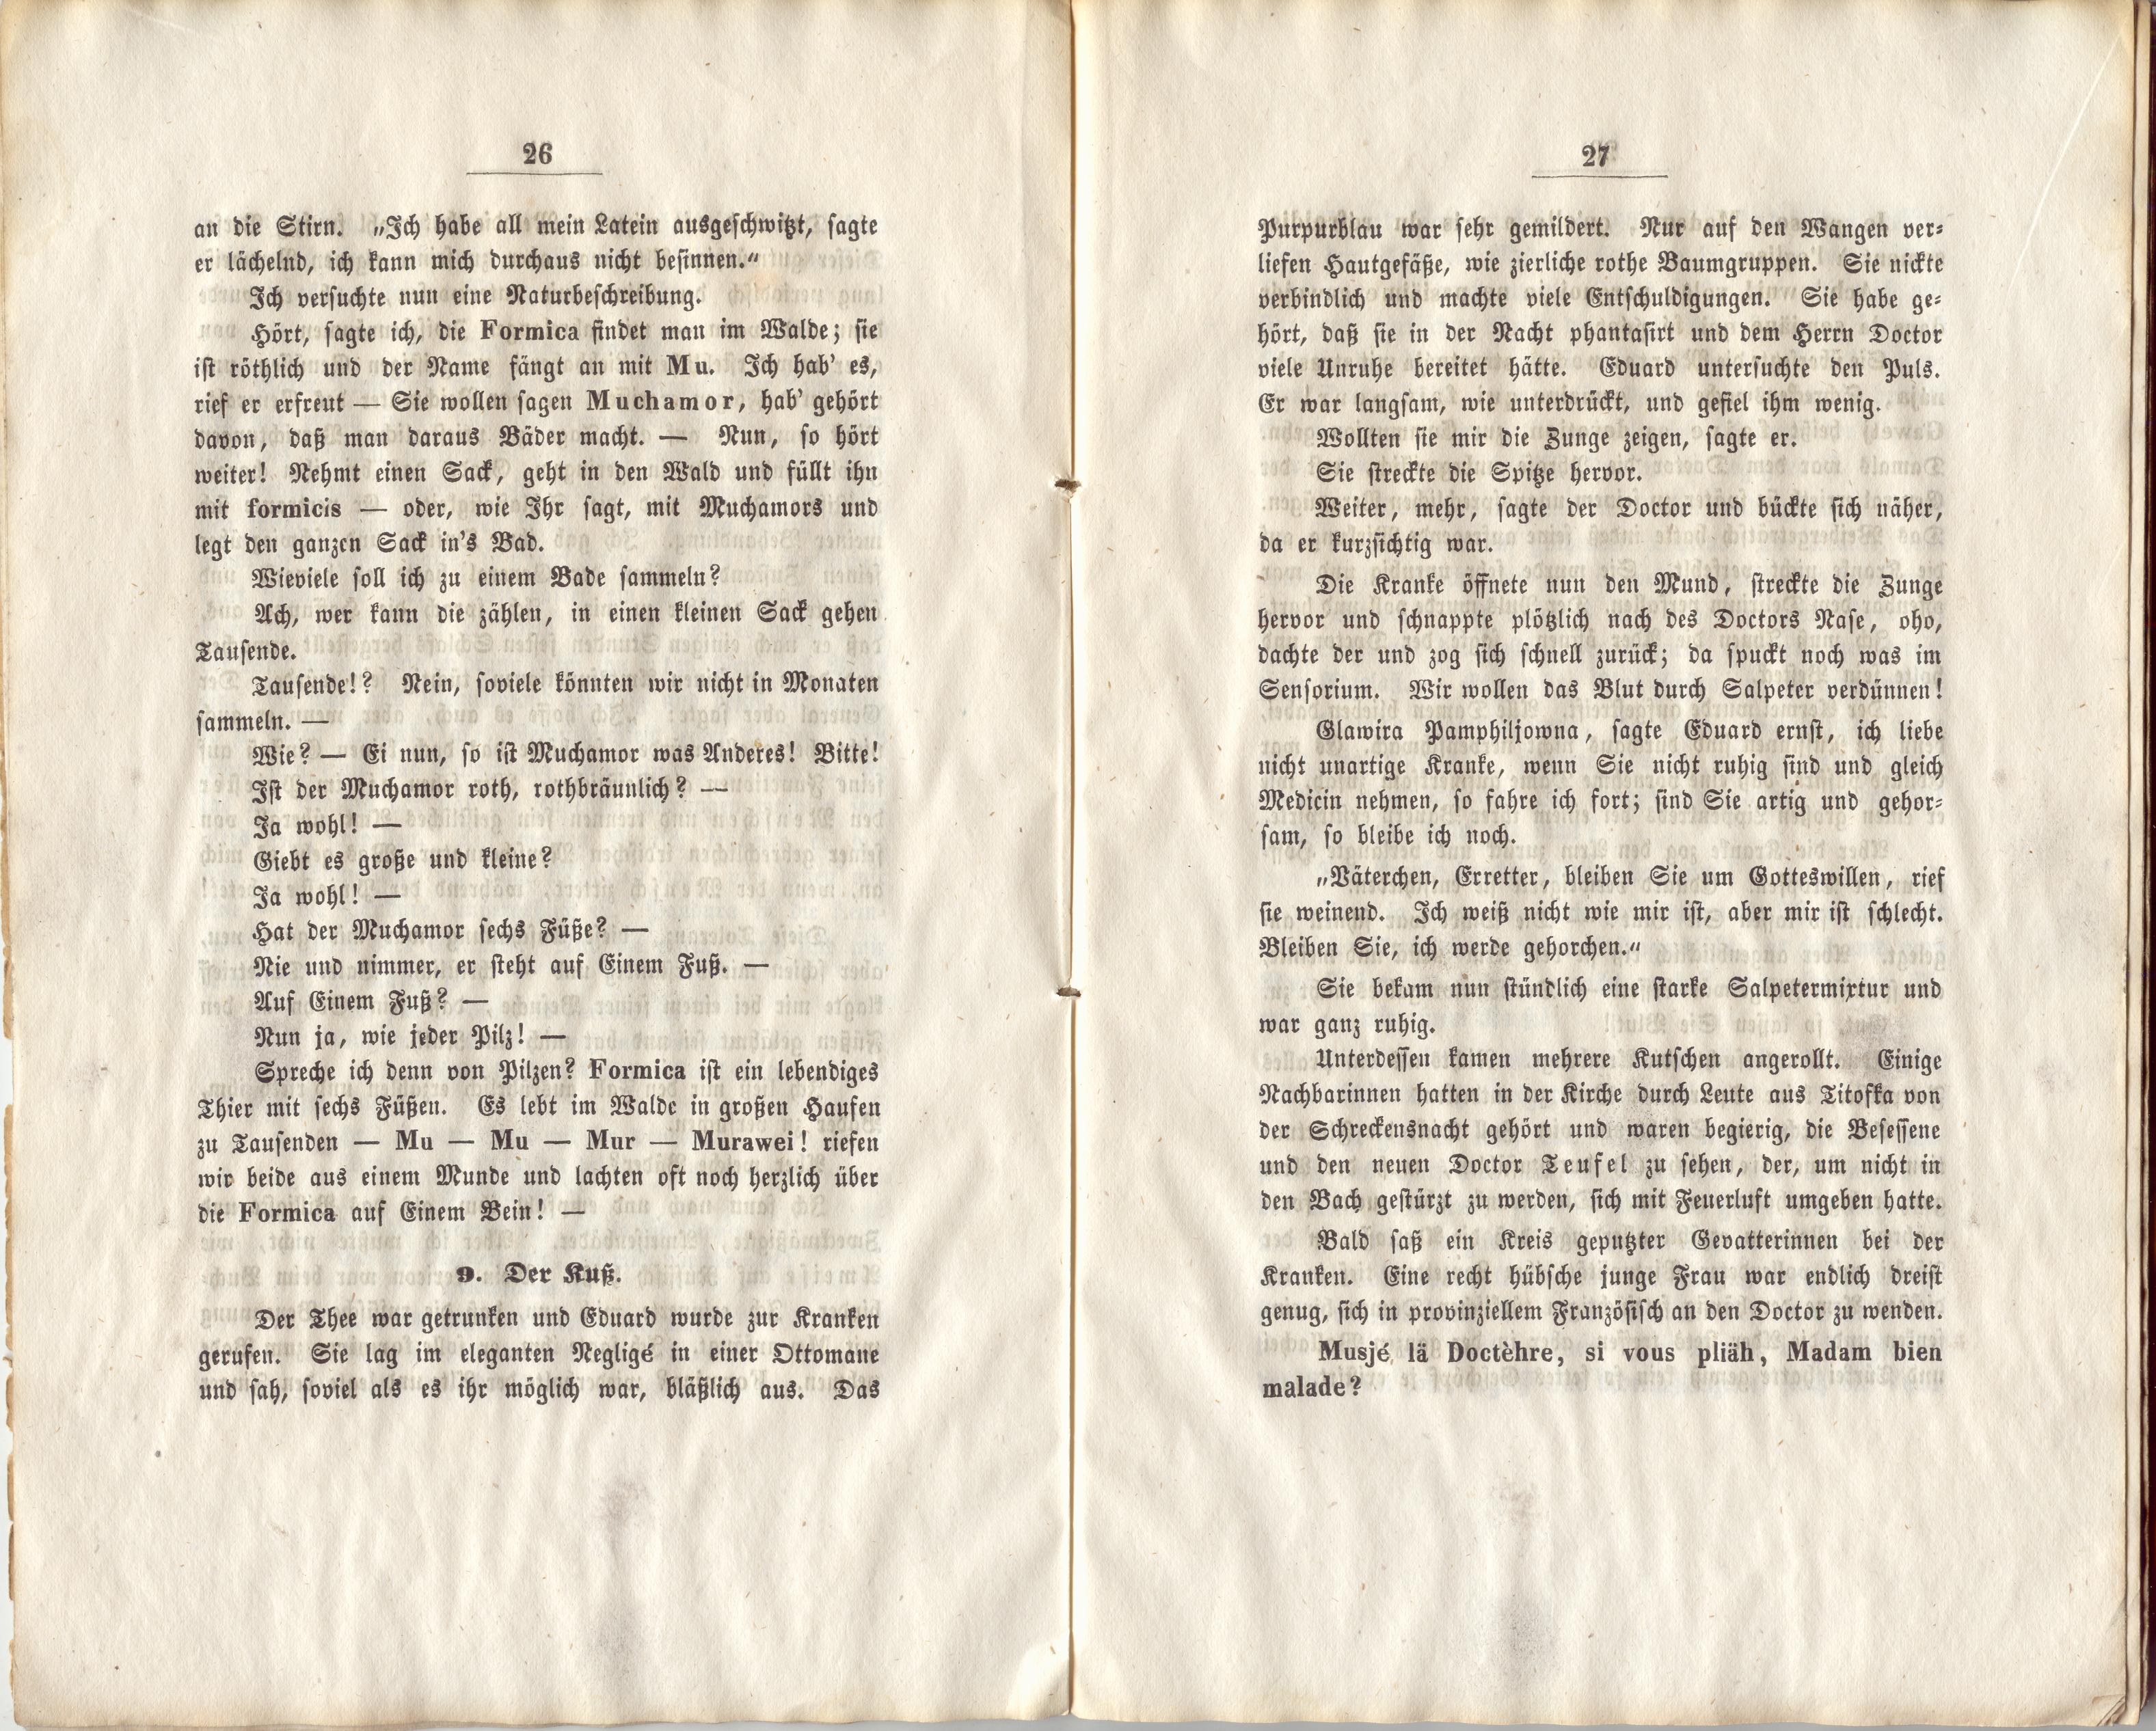 Medicinische Dorfgeschichten (1860) | 15. (26-27) Main body of text